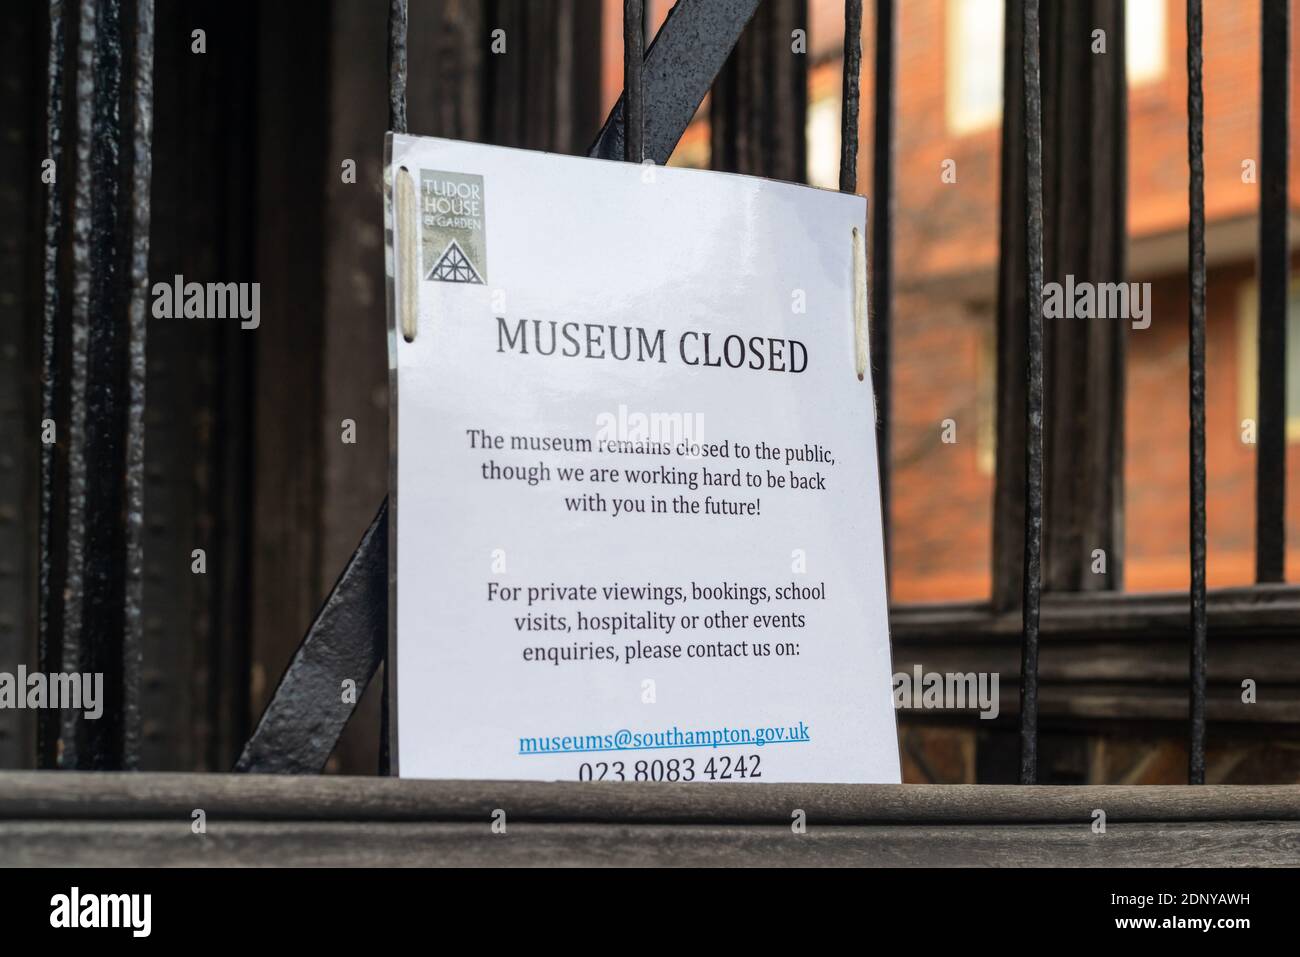 Museum geschlossen Schild am Eingang des Tudor House Museum in Southampton während der Covid-19 Pandemie Dezember 2020, Hampshire, England, Großbritannien Stockfoto